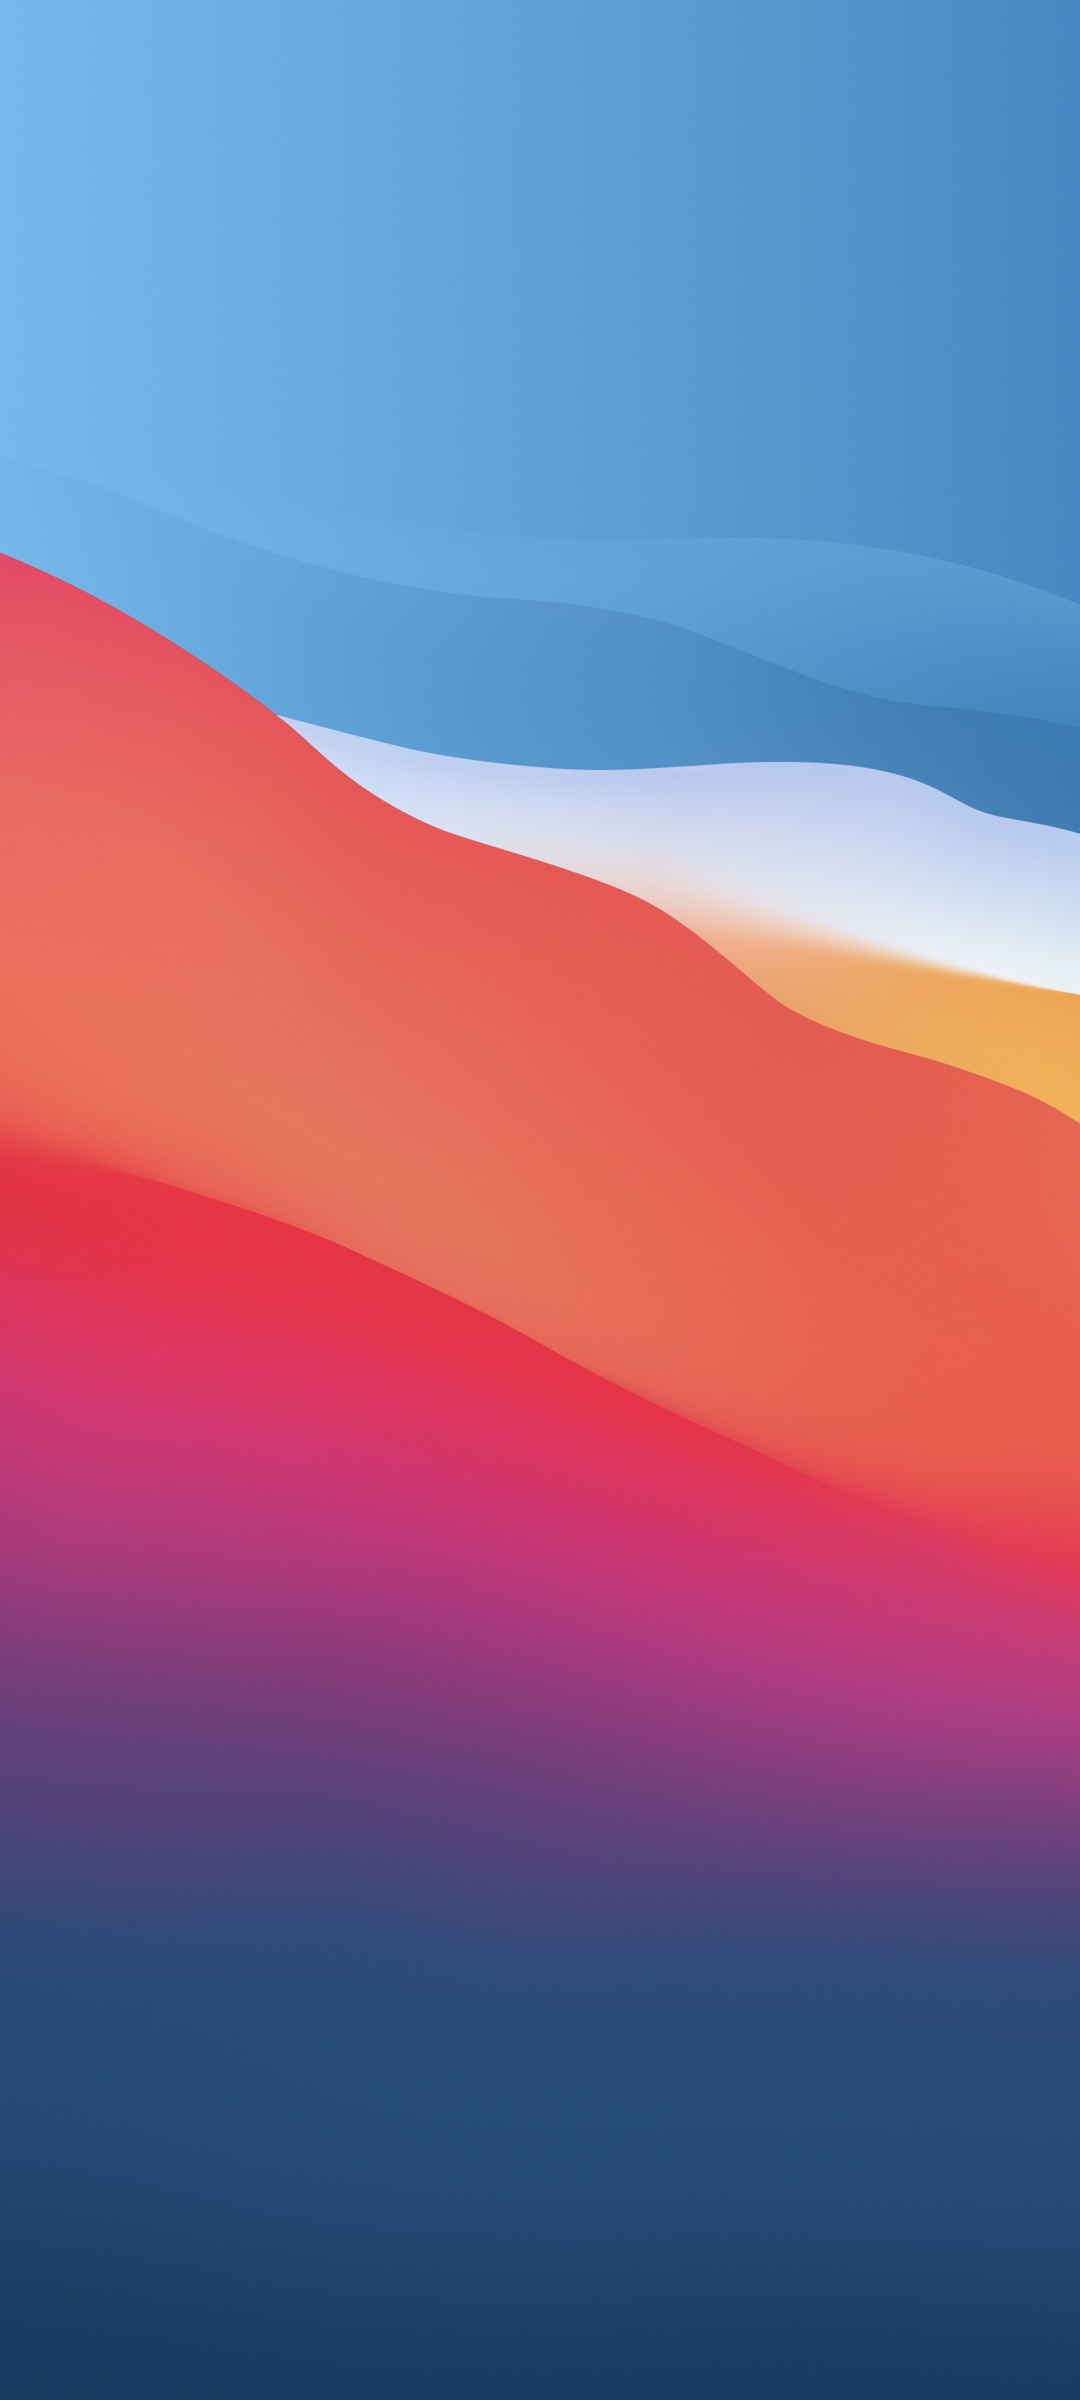 macOS Big Sur 4K Wallpaper, Colorful, Waves, Smooth, Stock, Apple